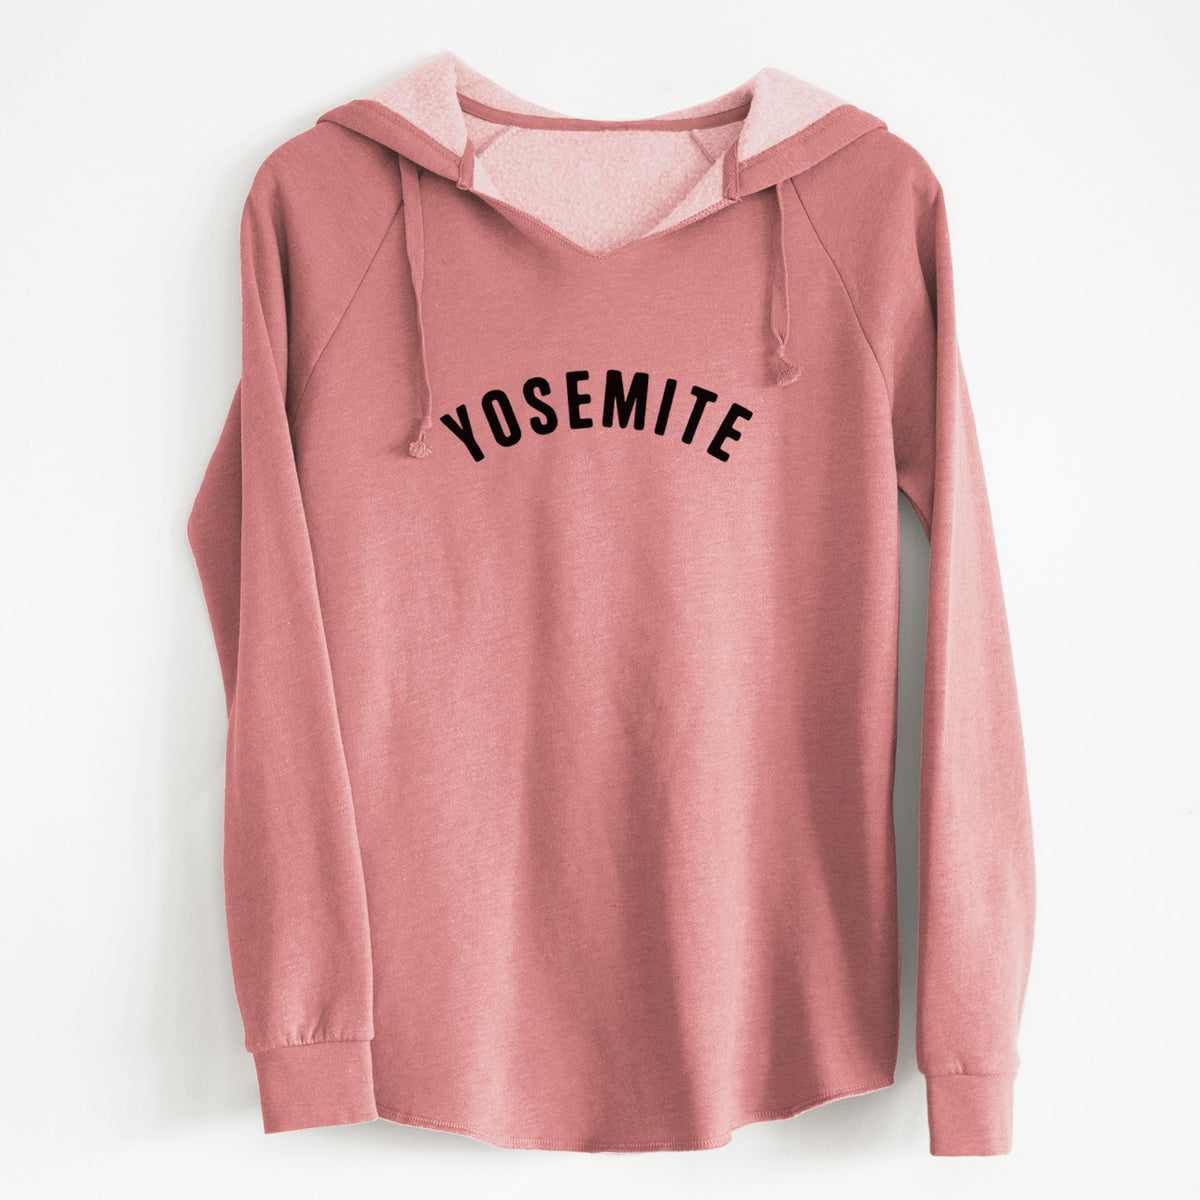 Yosemite - Cali Wave Hooded Sweatshirt